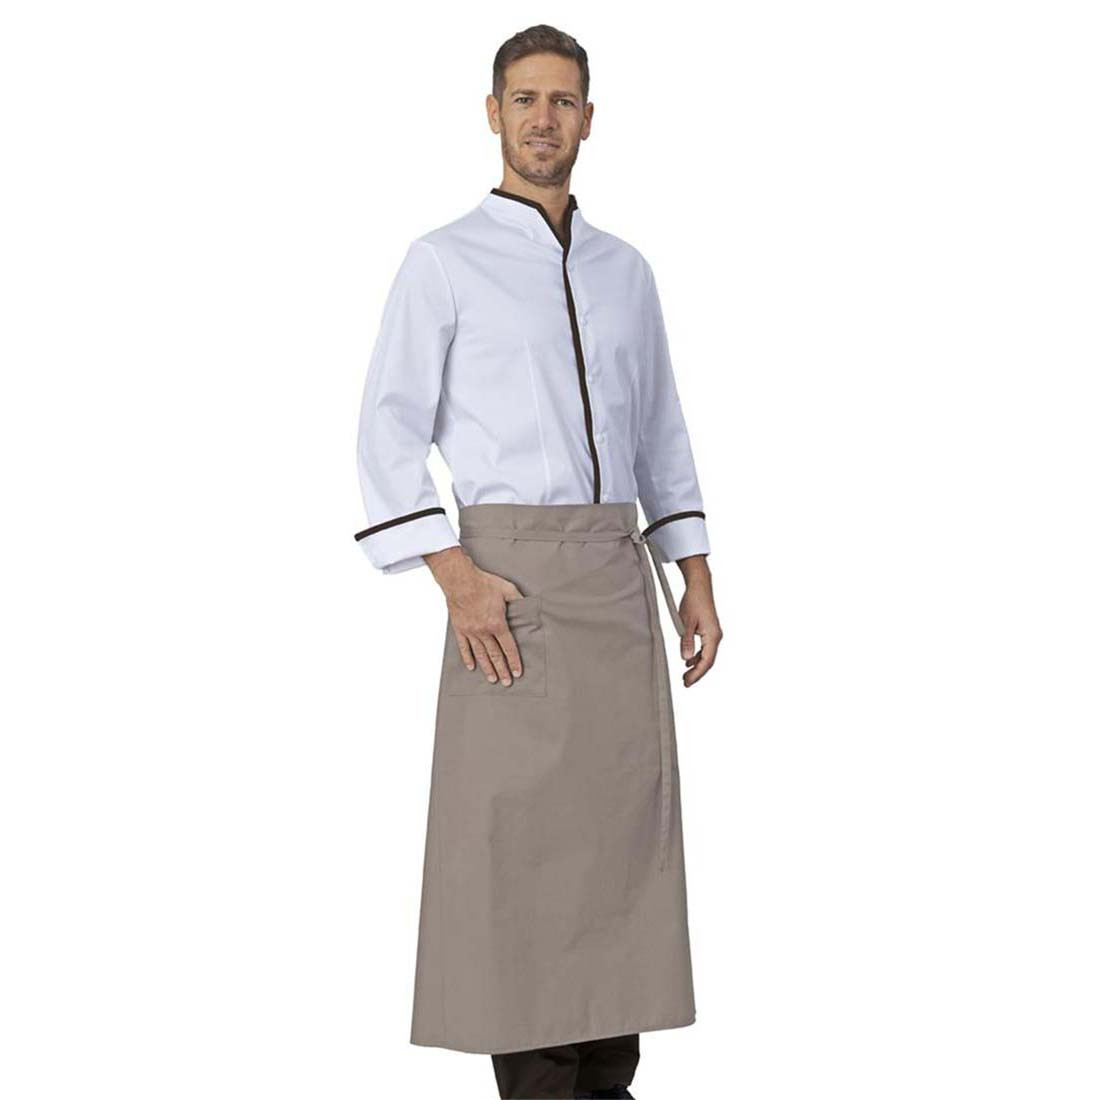 TRENTO II Chef's Apron - Safetywear